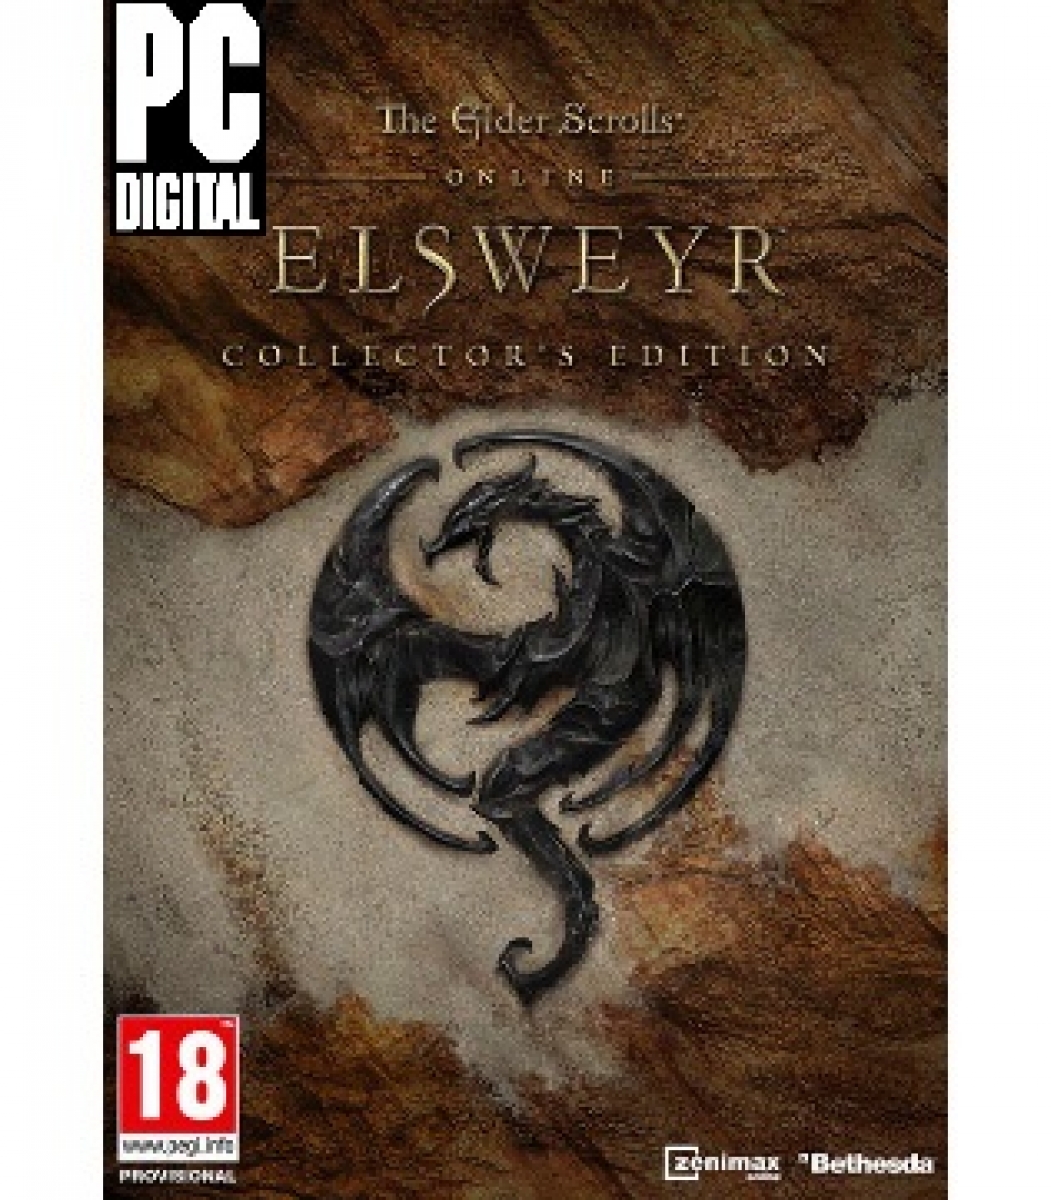 The Elder Scrolls Online: Elsweyr Digital Collector’s Edition PC (Digital)